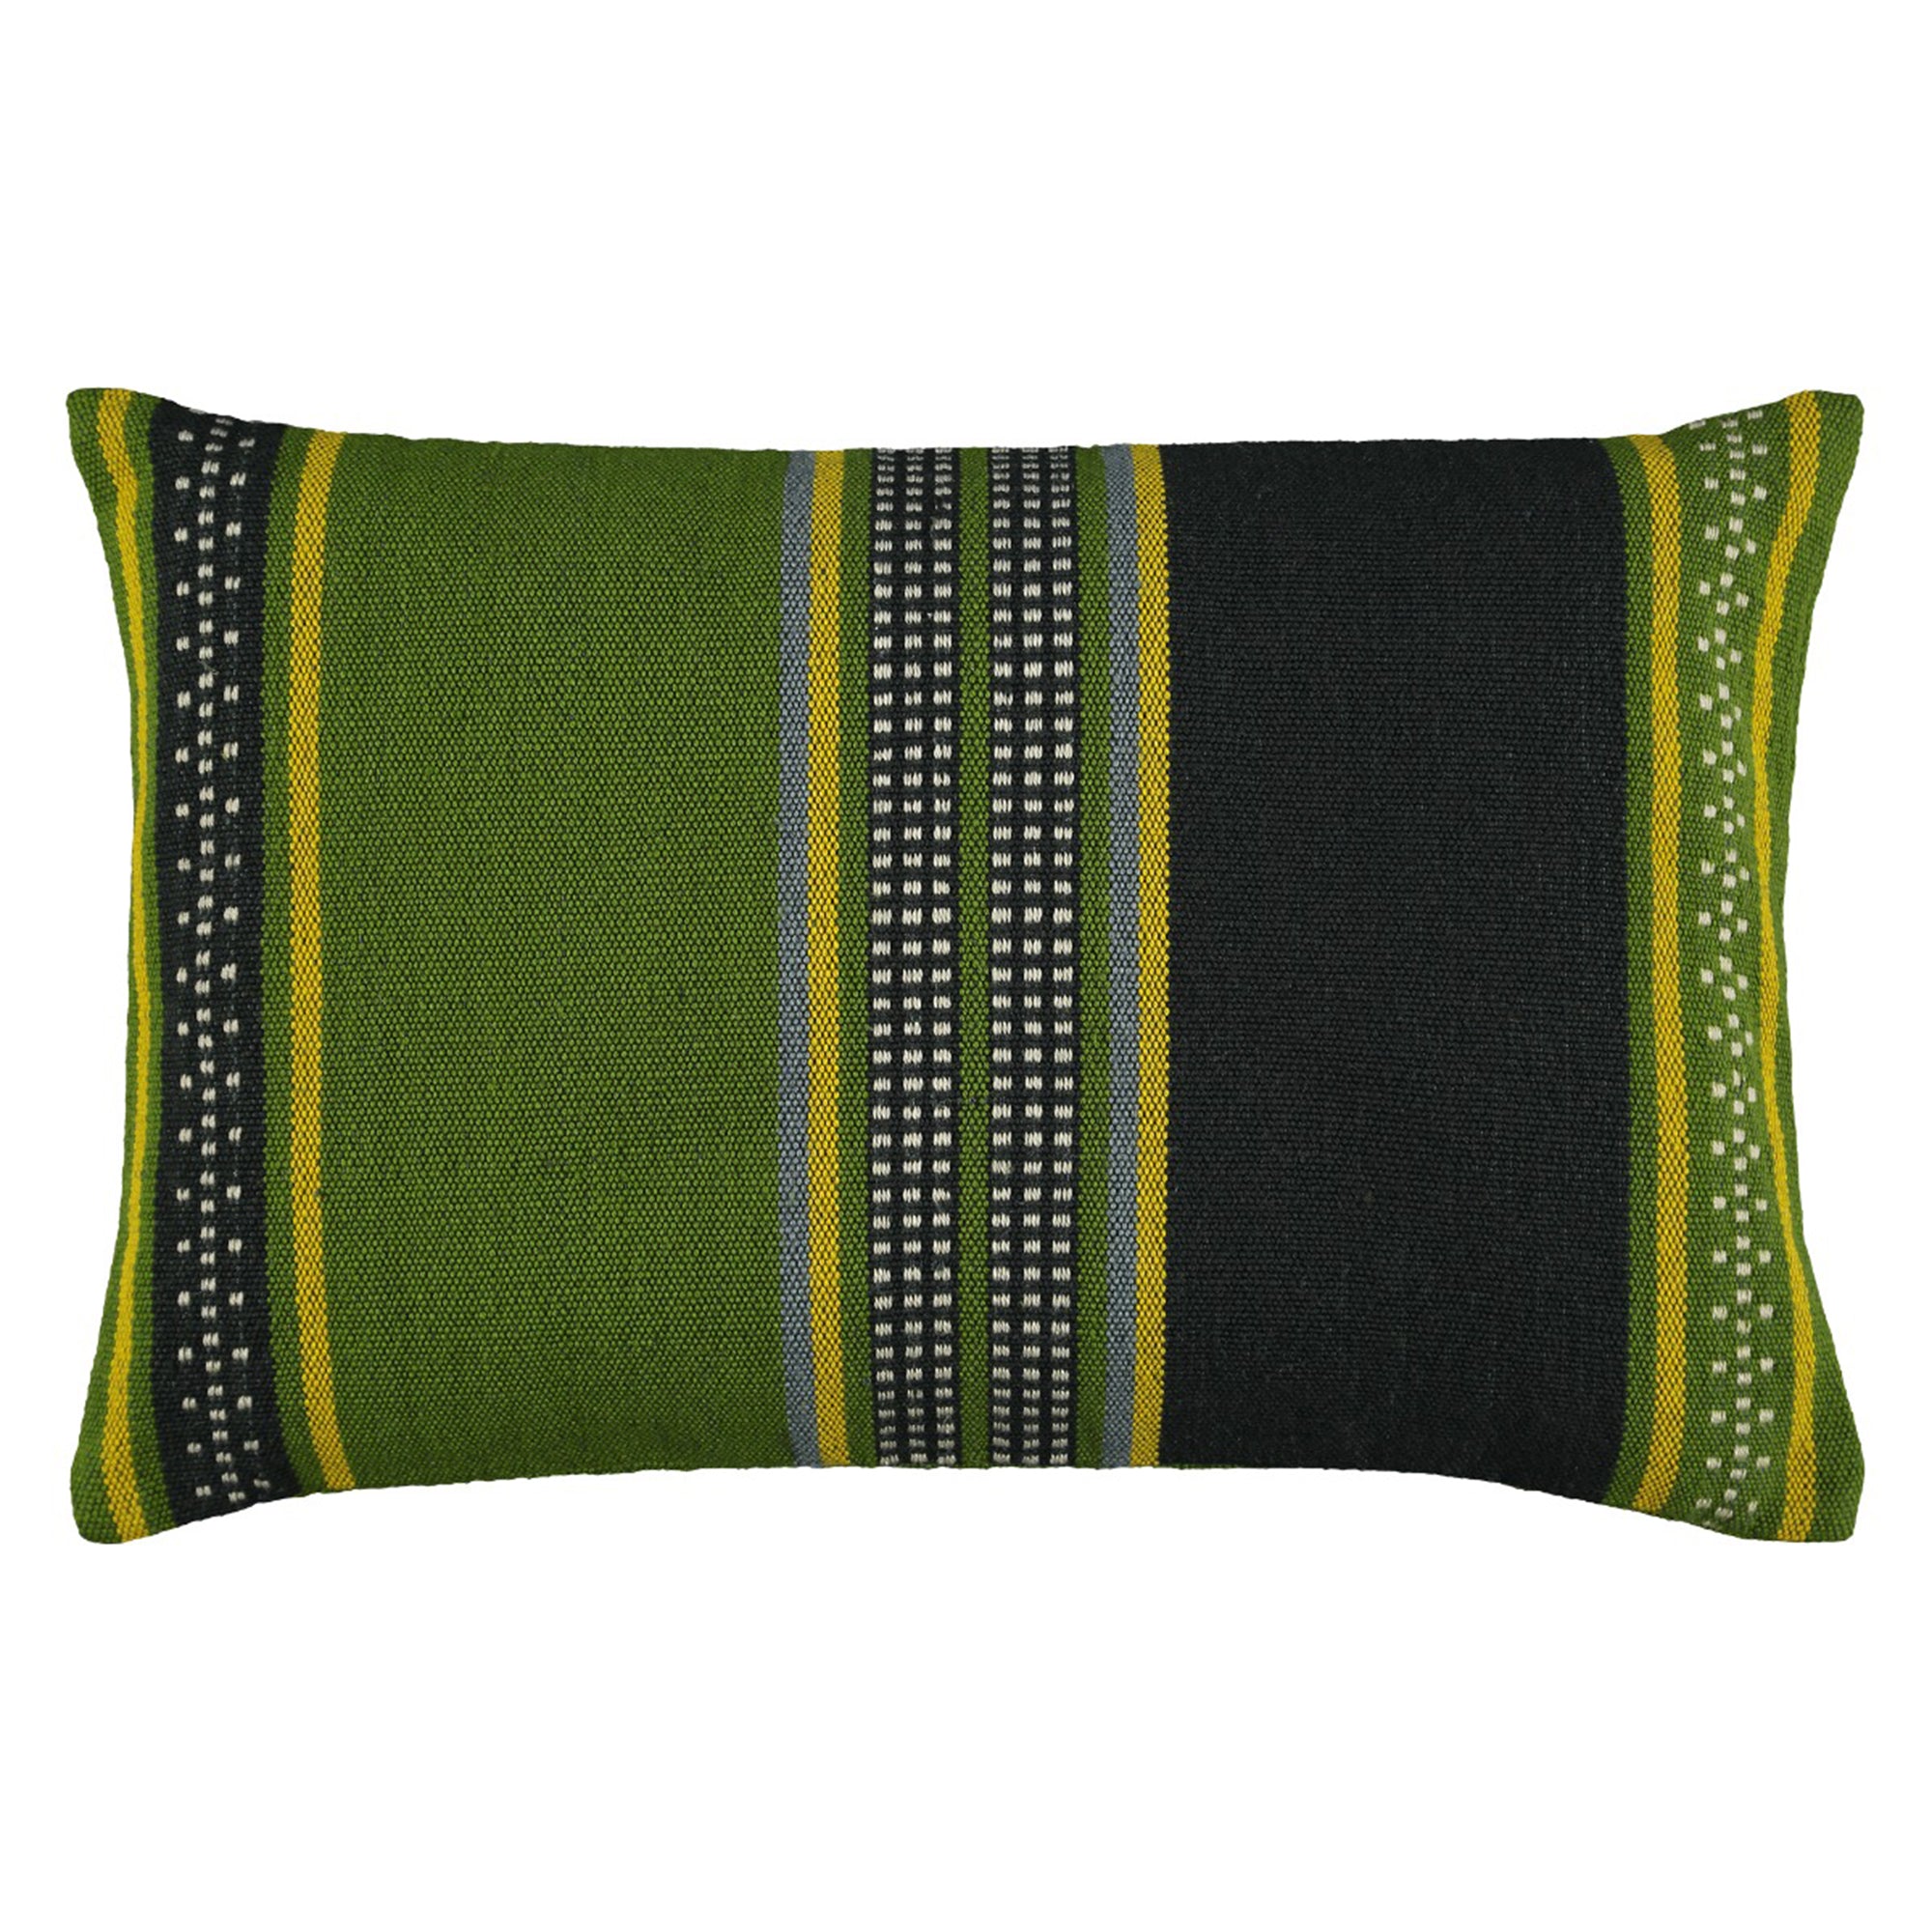 William Yeoward Espagnola Grass Outdoor Cushion